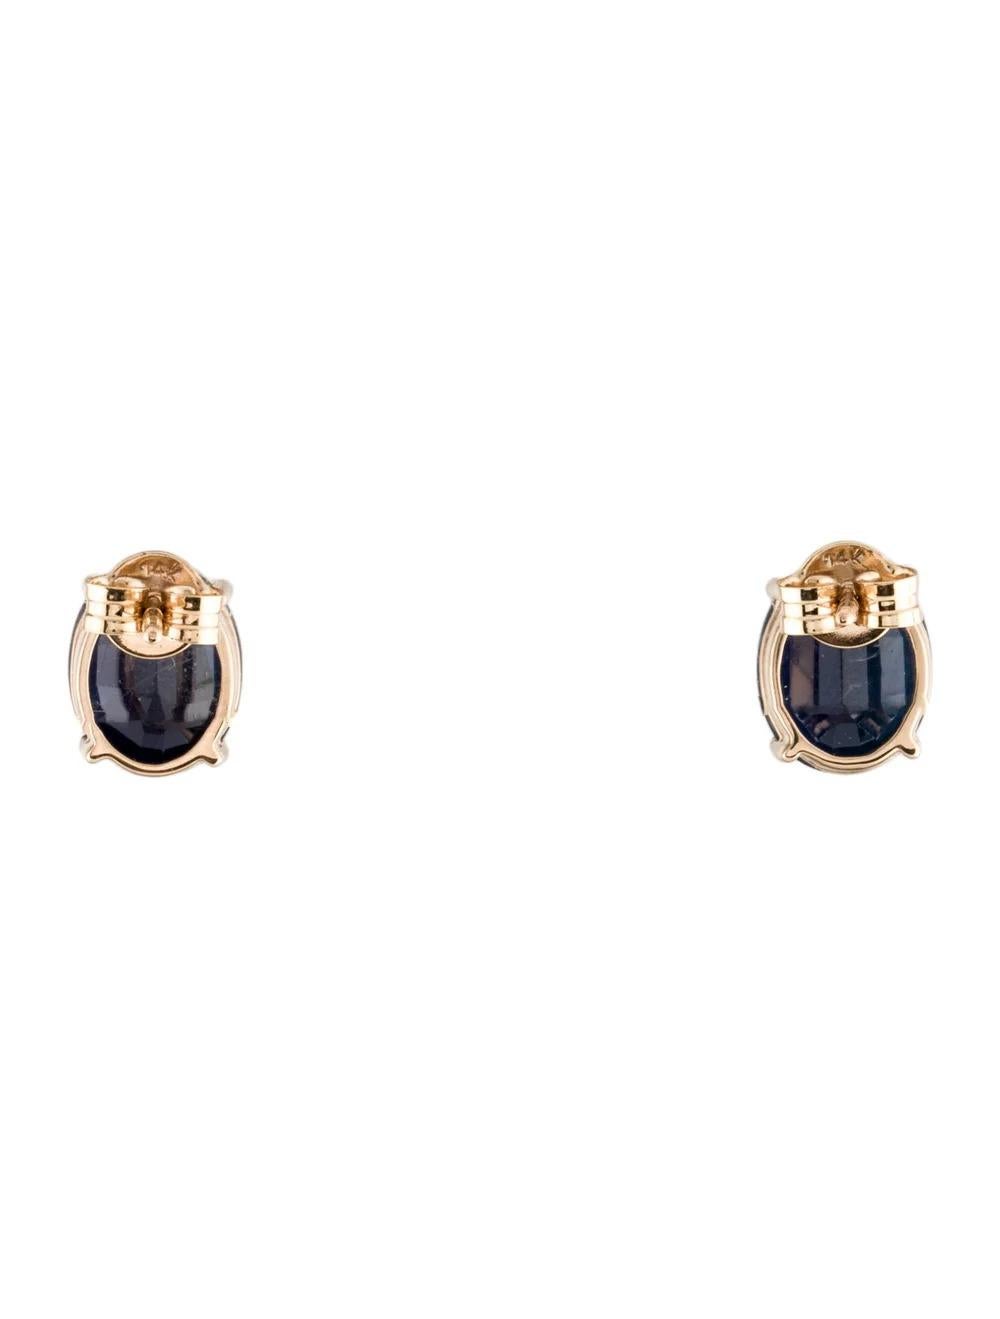 Oval Cut 14K Sapphire Stud Earrings 6.58ctw Timeless, Fine Jewelry for Elegant Style For Sale